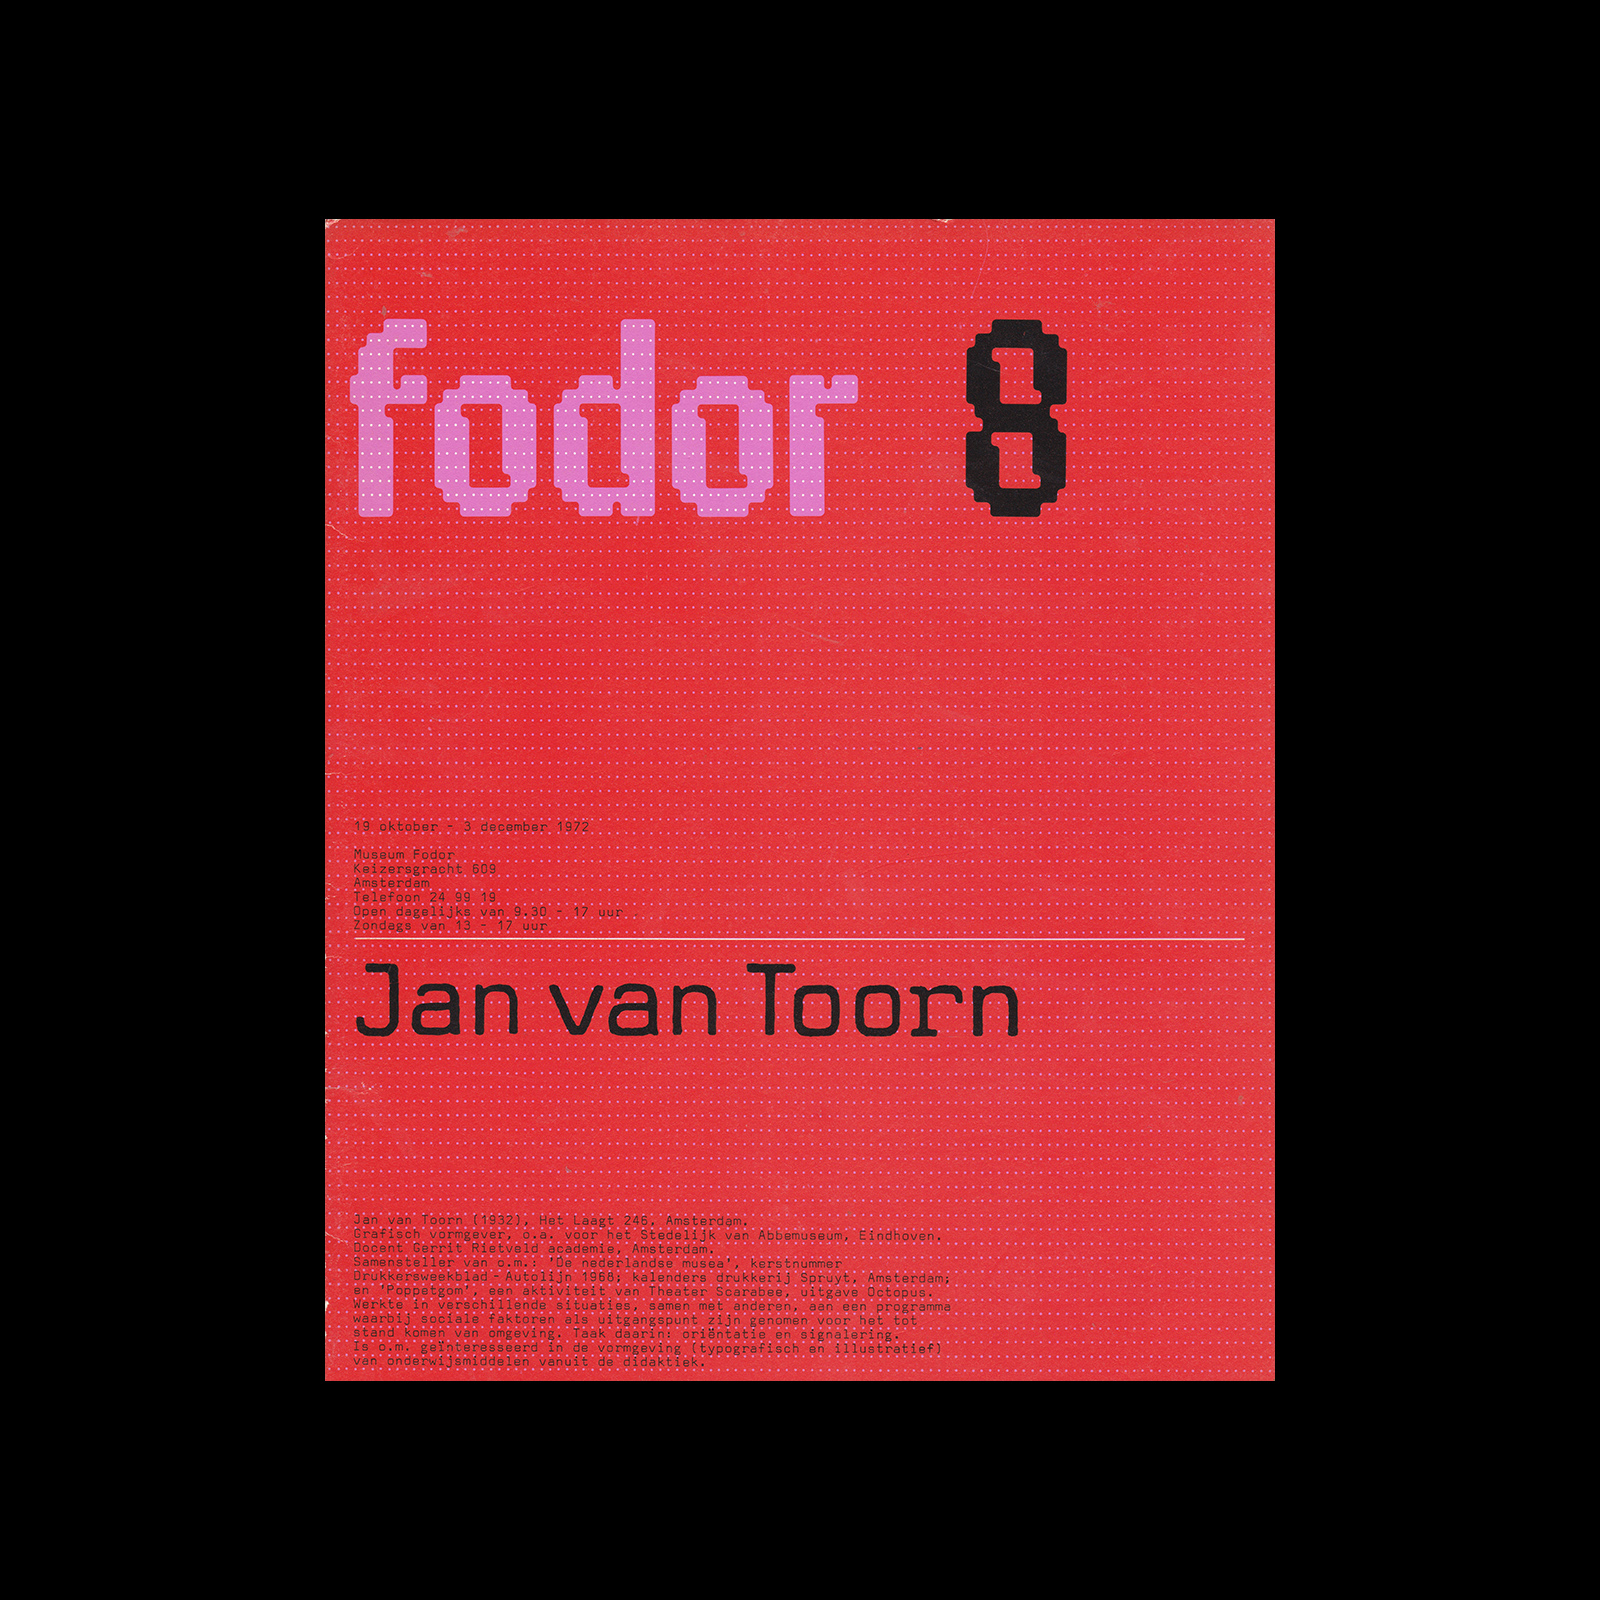 Fodor 8, 1972 - Jan van Toorn. Designed by Wim Crouwel